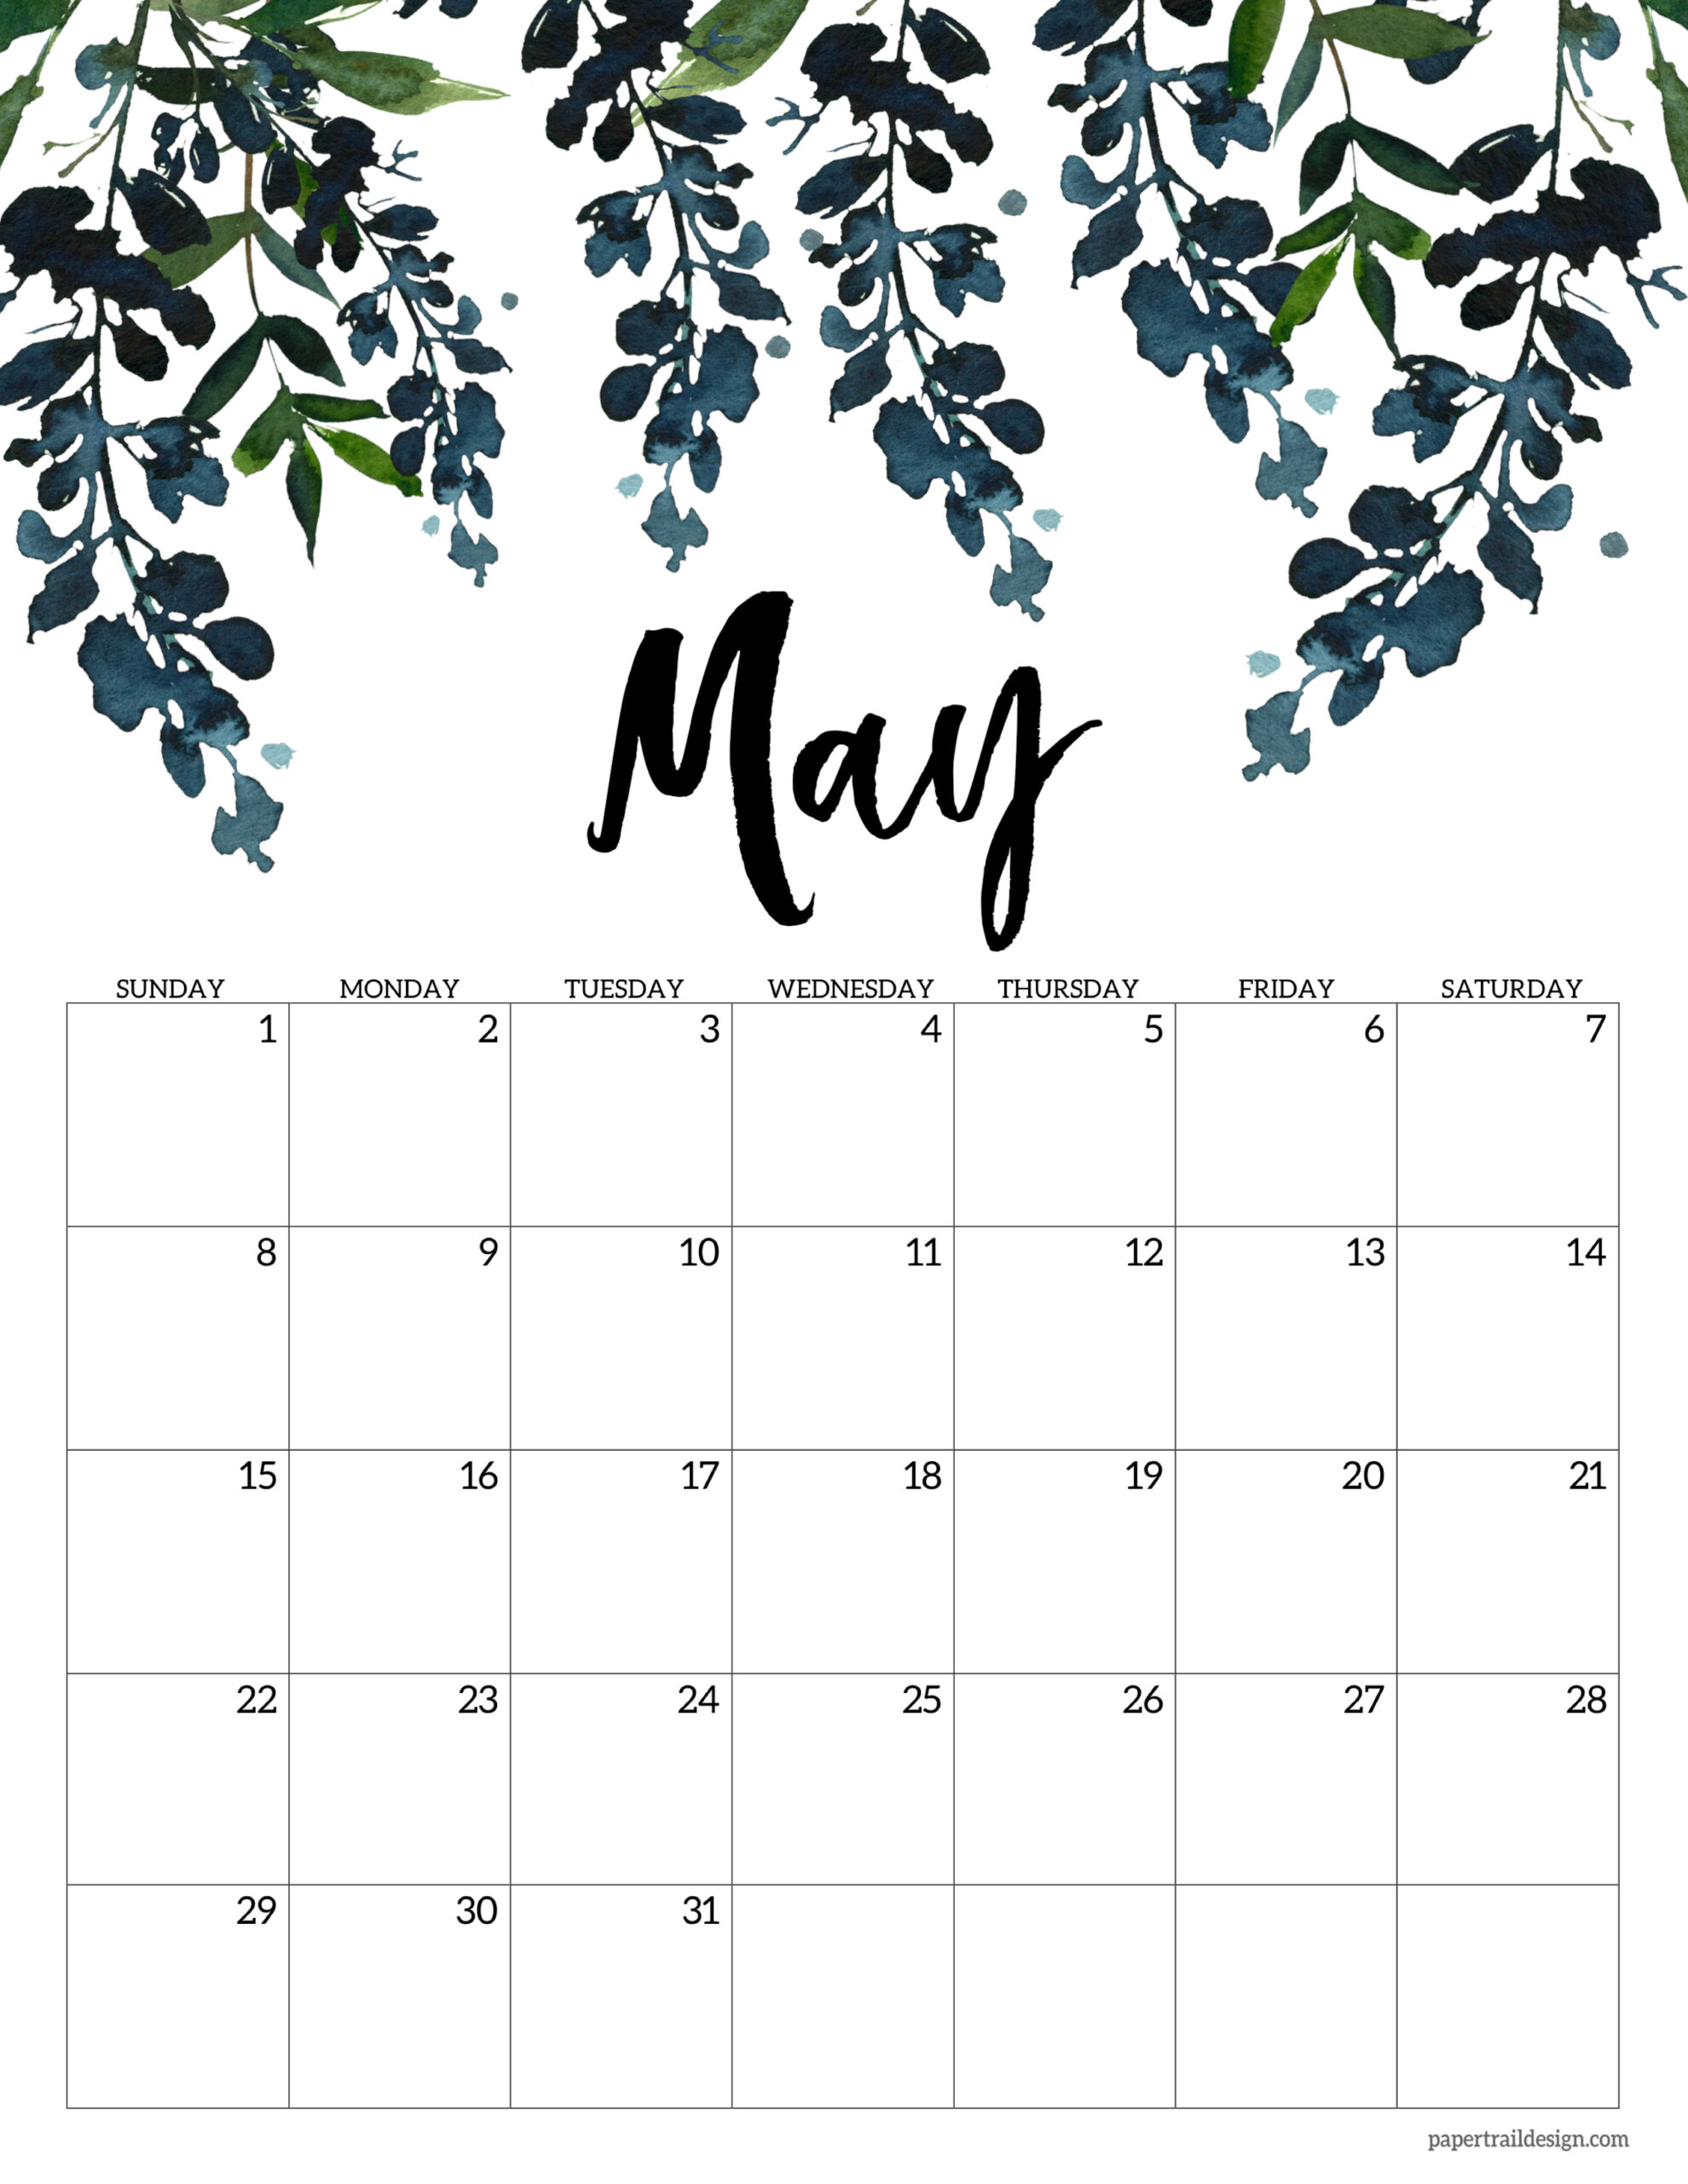 May 2022 Printable Calendar Free 2022 Calendar Printable - Floral - Paper Trail Design